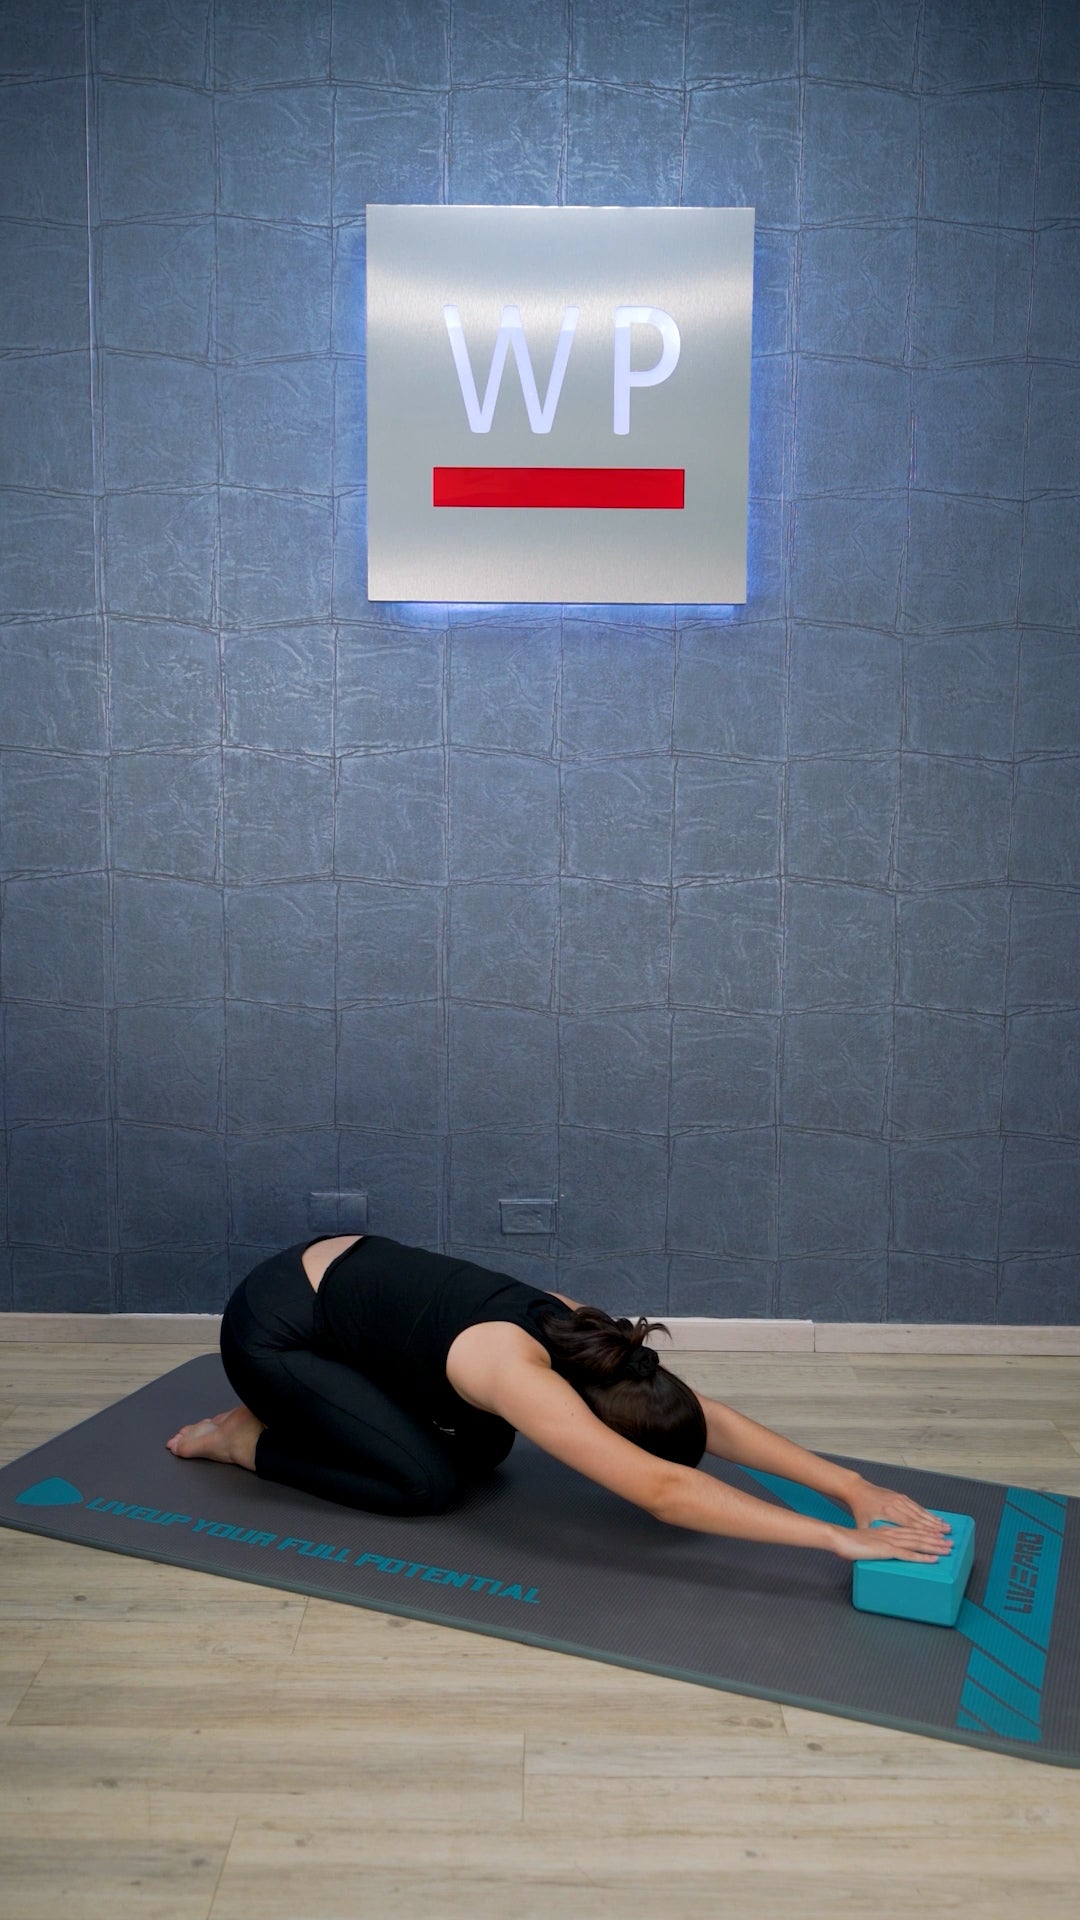 Bloque Ladrillo Yoga Pilates Rehabilitación Flexibilidad — Lemau